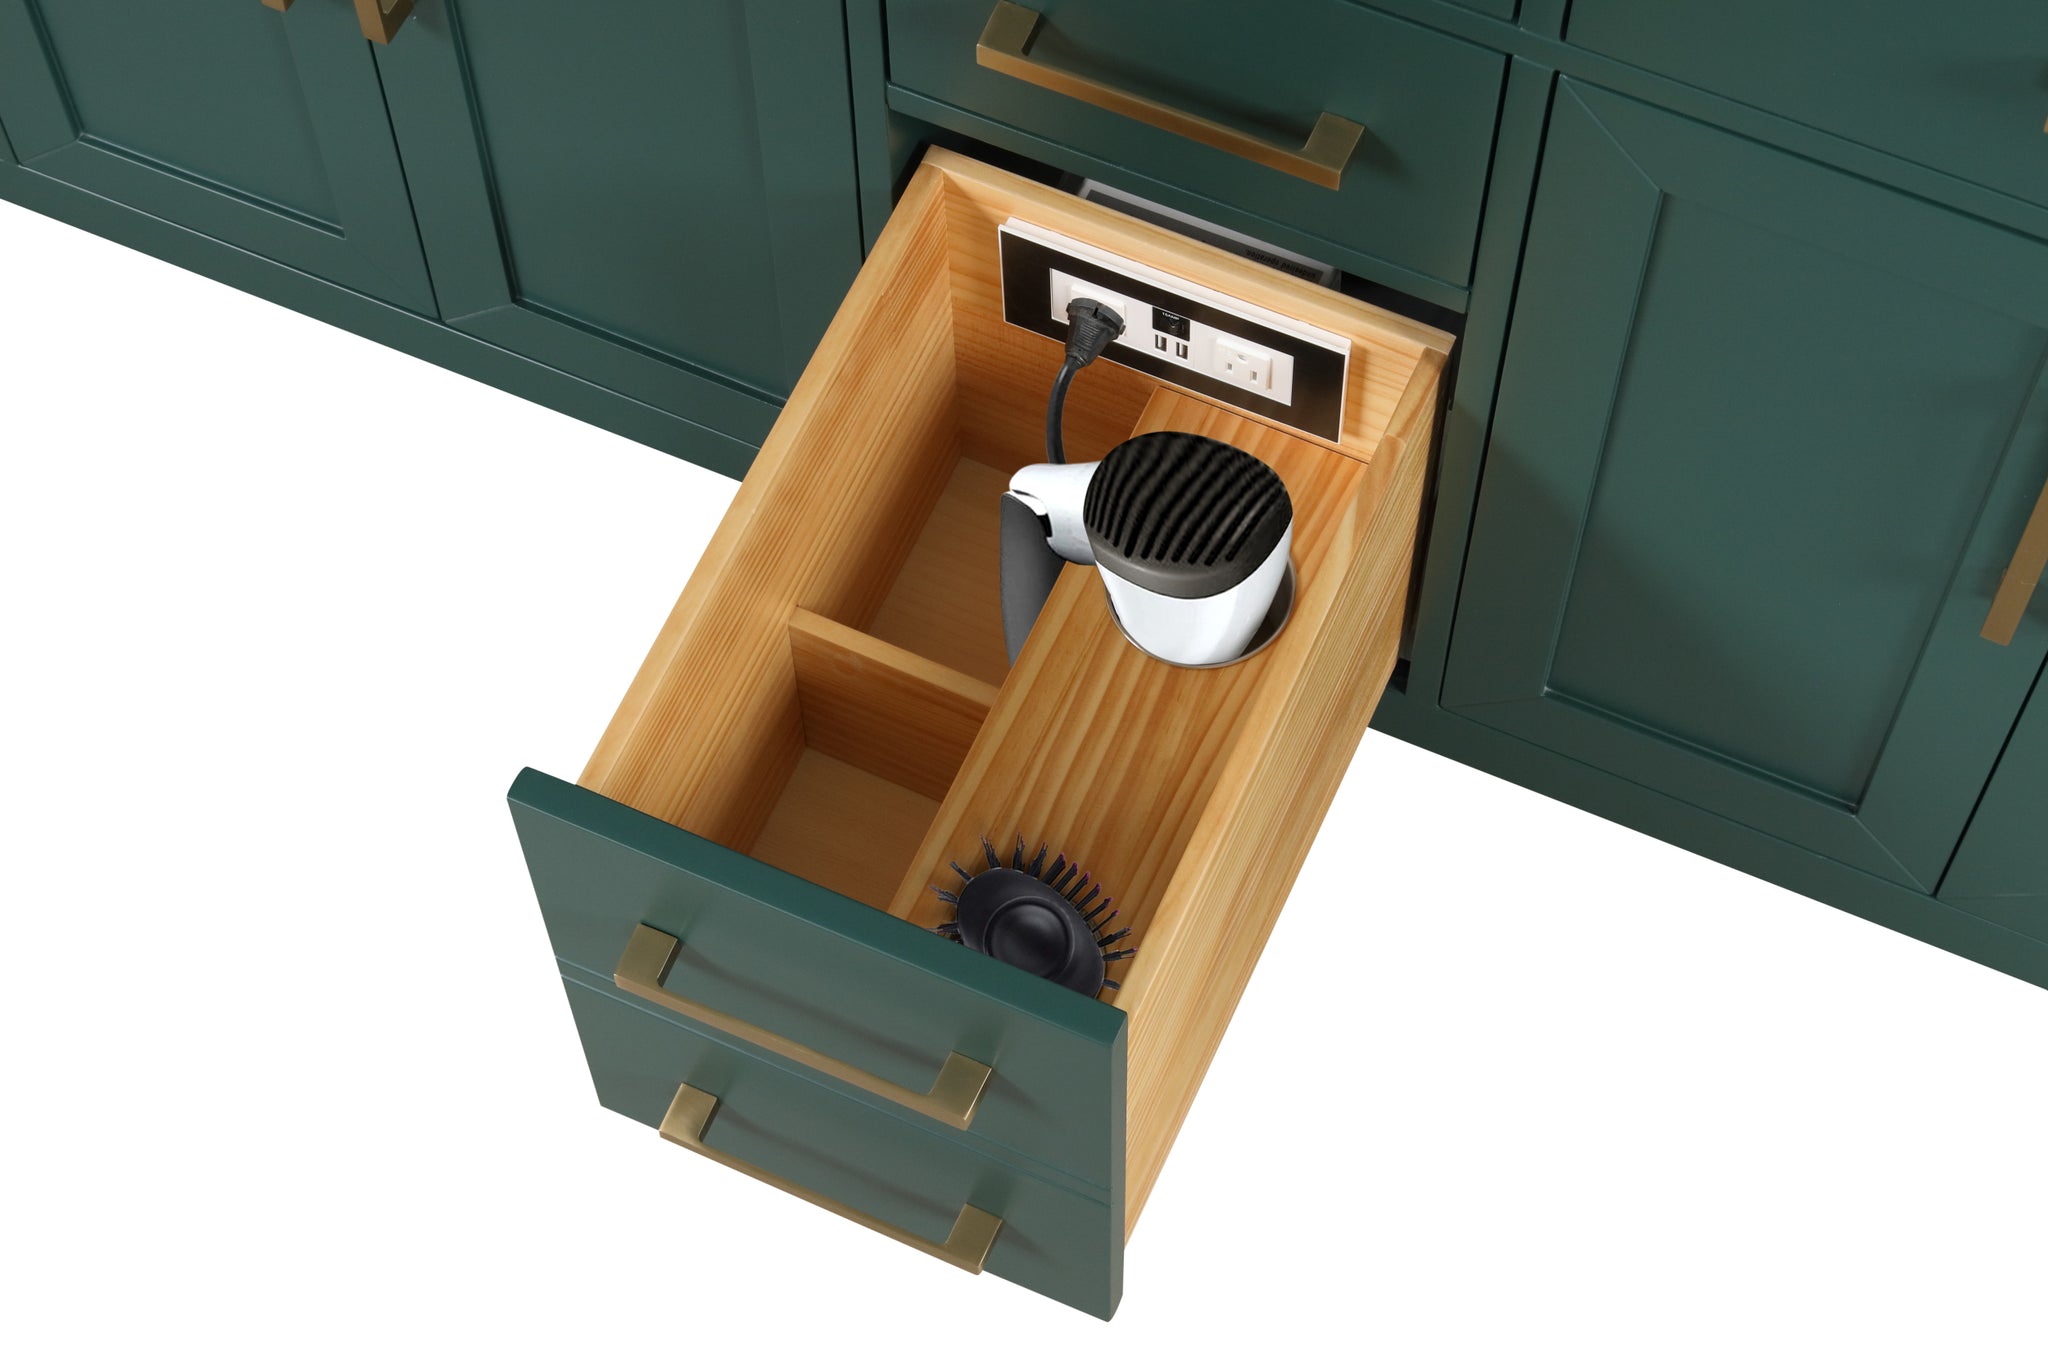 84" Bathroom Vanity with Double Sink, Modern Bathroom green-bathroom-modern-solid wood